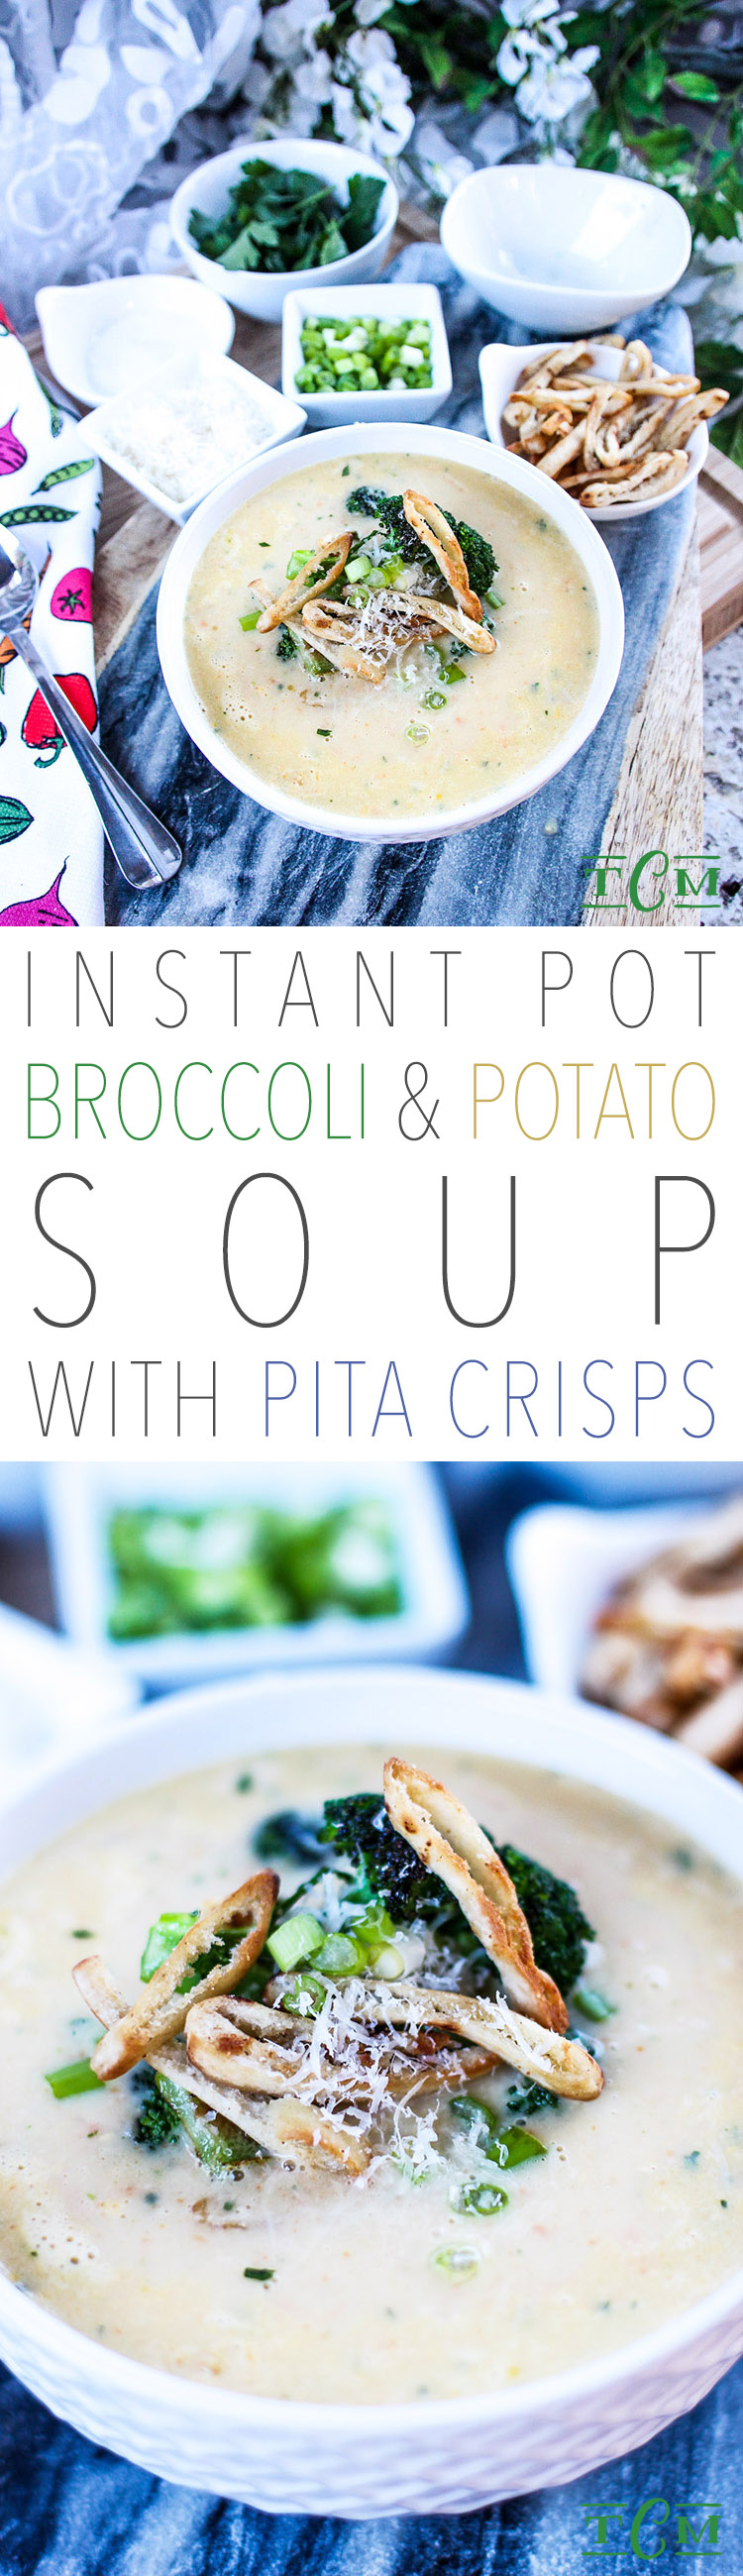 http://thecottagemarket.com/wp-content/uploads/2017/03/Potato-Broccoli-Soup-Toasted-Pita-TOWER-1.jpg